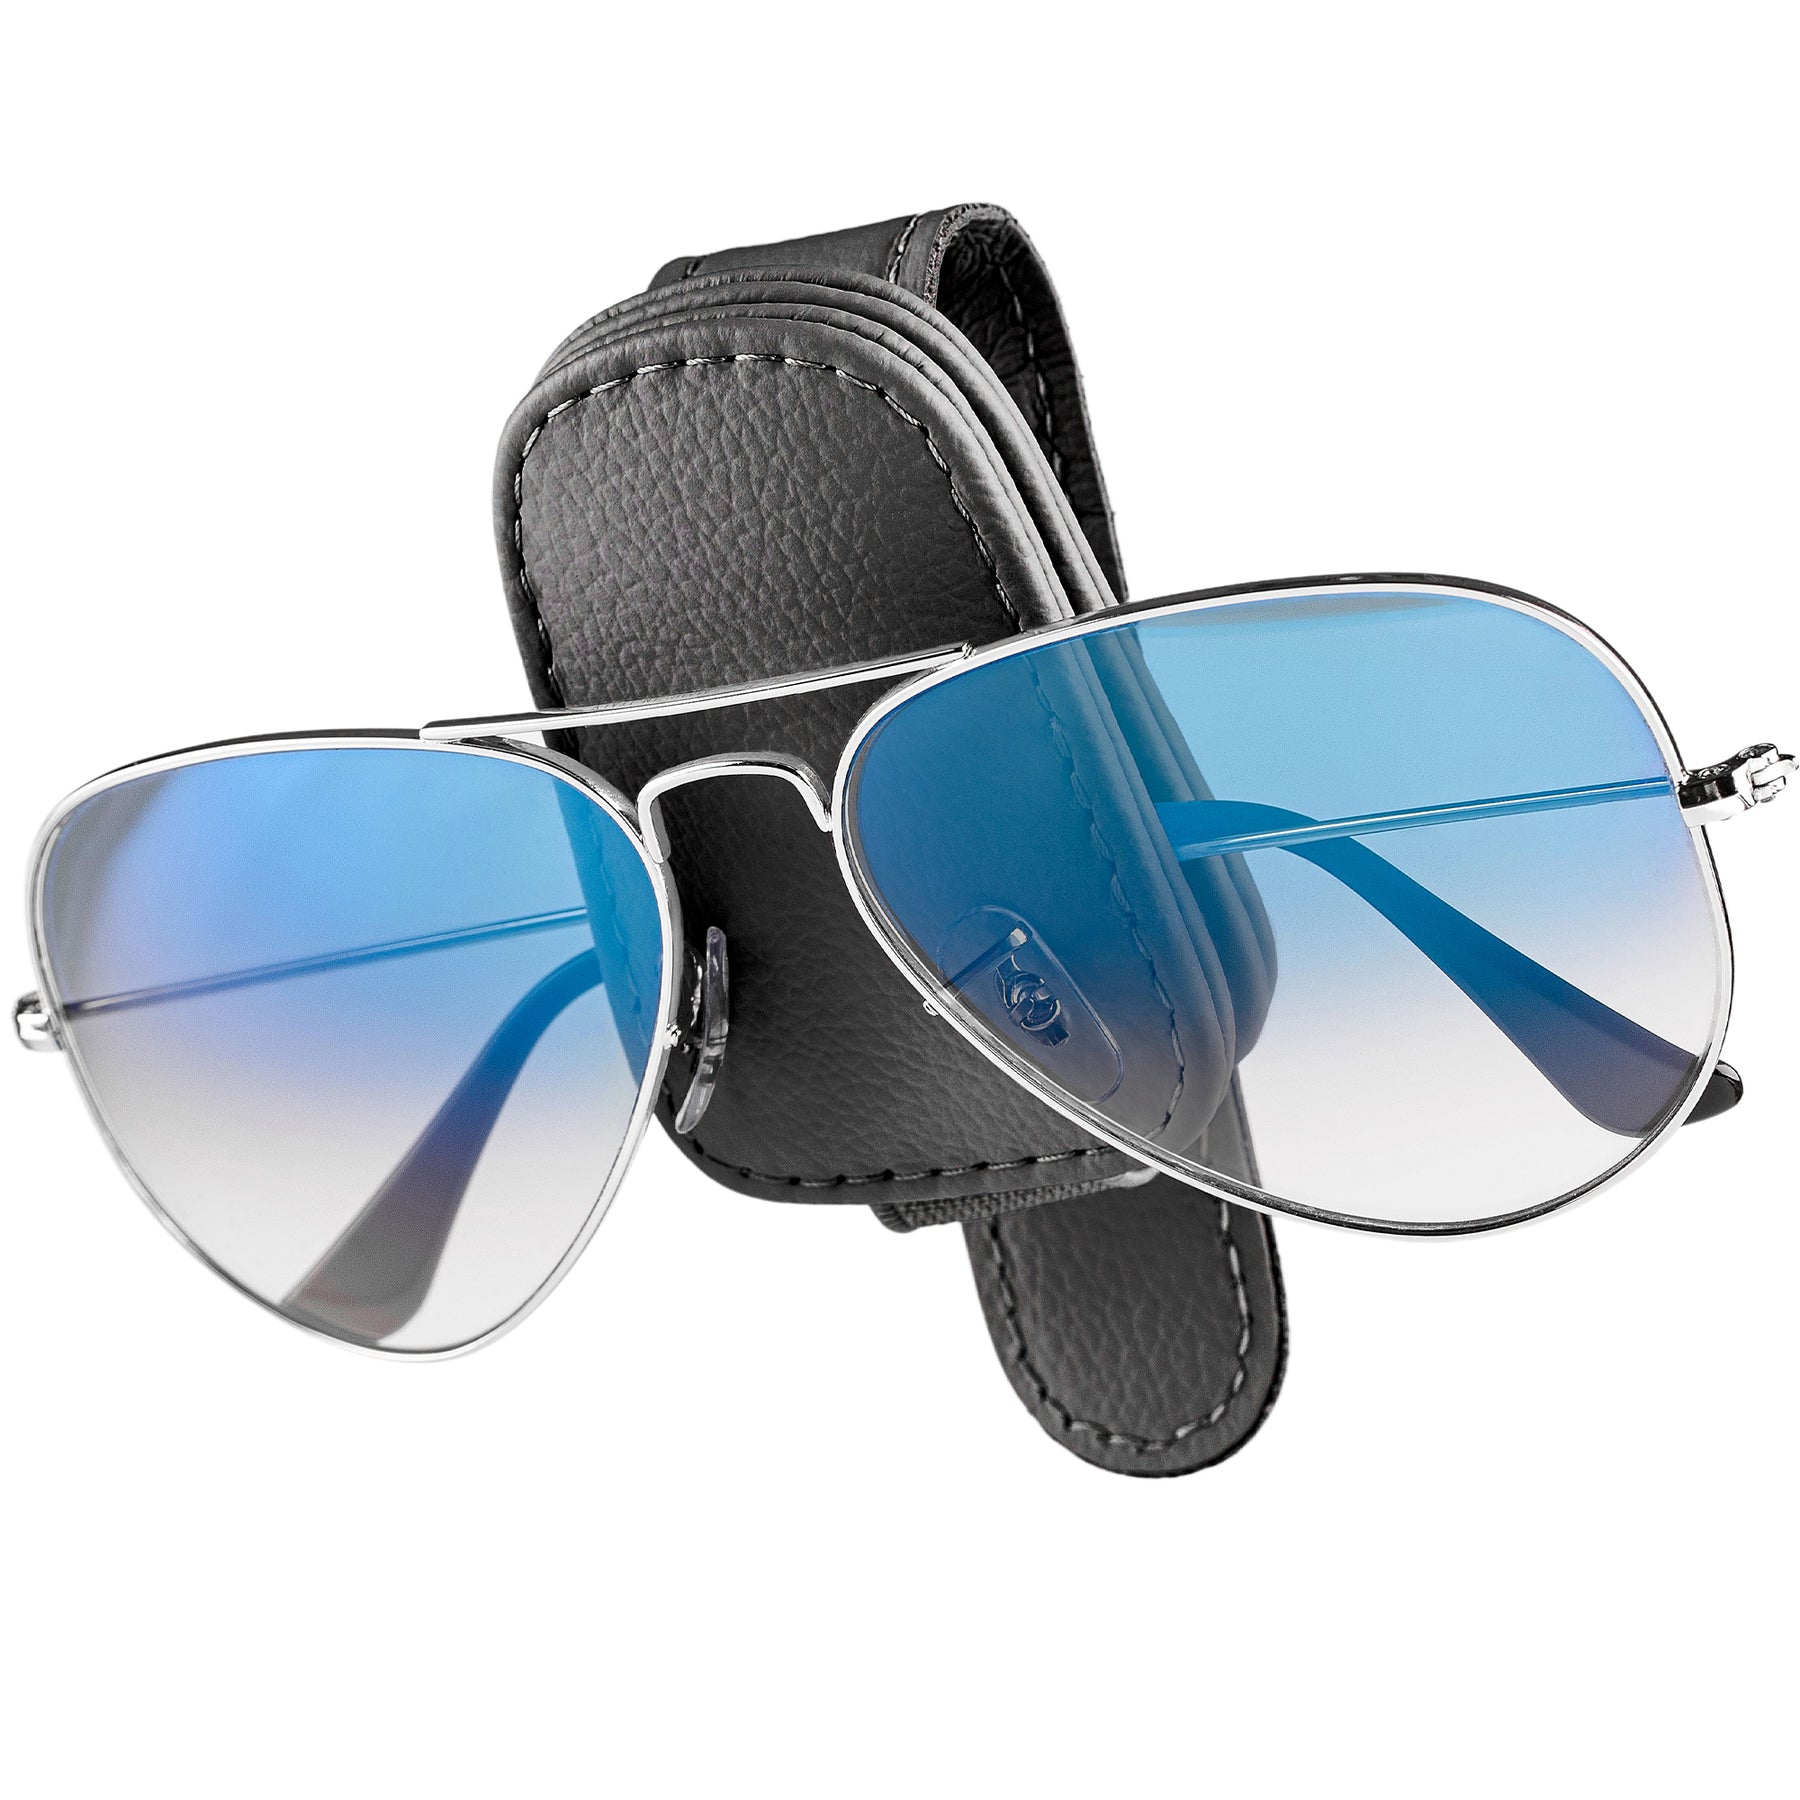 Sunglasses Clip Holder